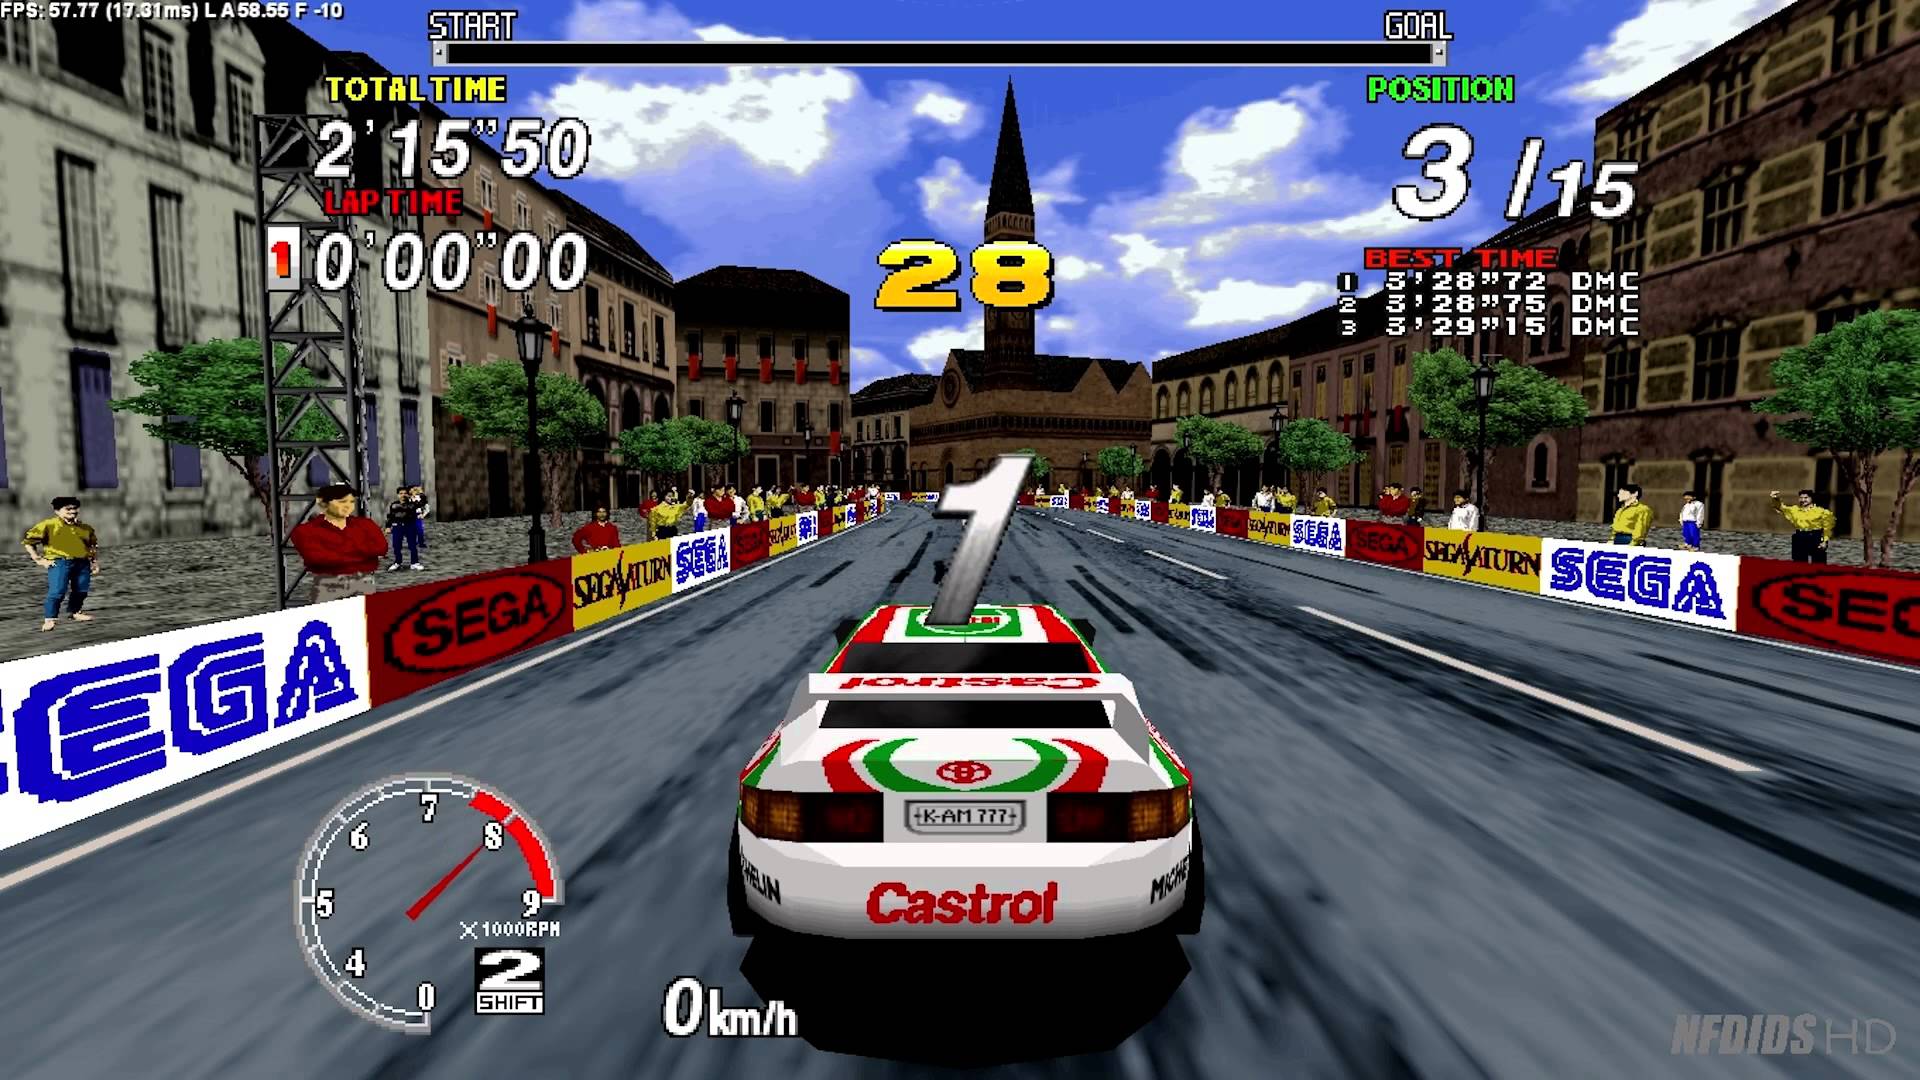 Sega Rally Backgrounds on Wallpapers Vista